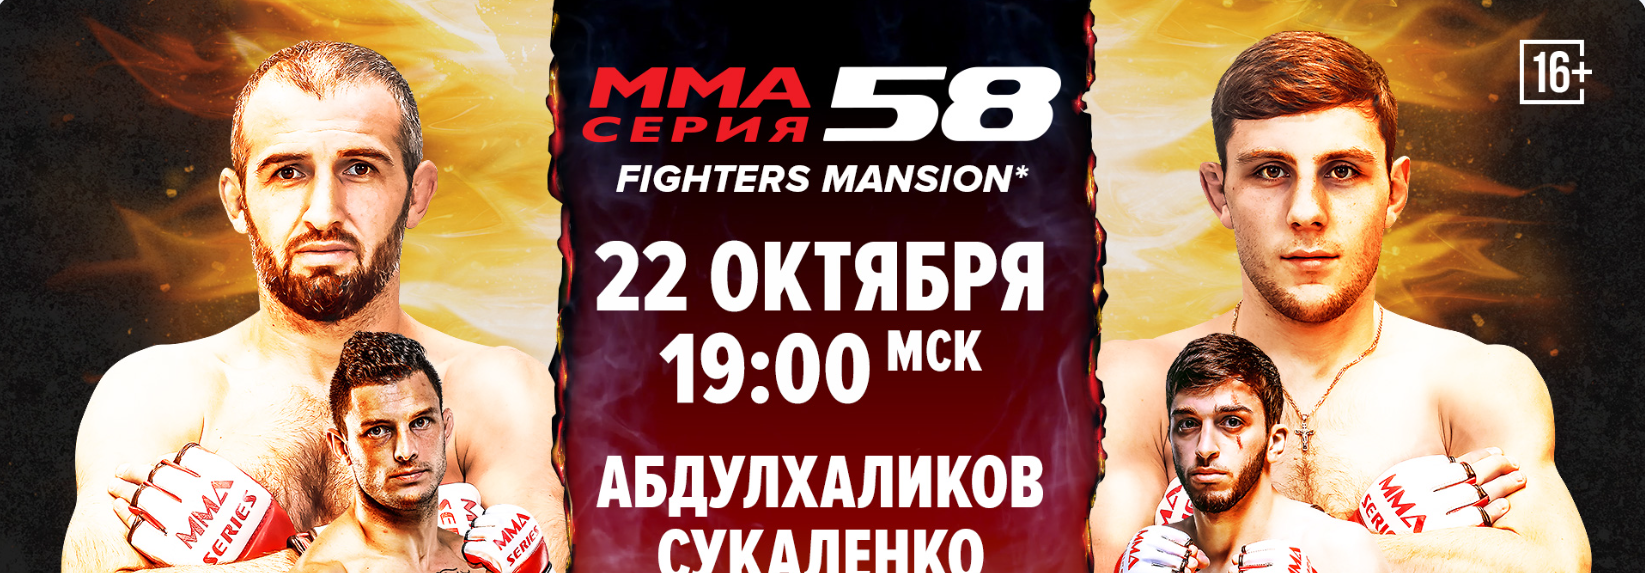 Стал известен полный кард ММА Серия-58: Fighters Mansion